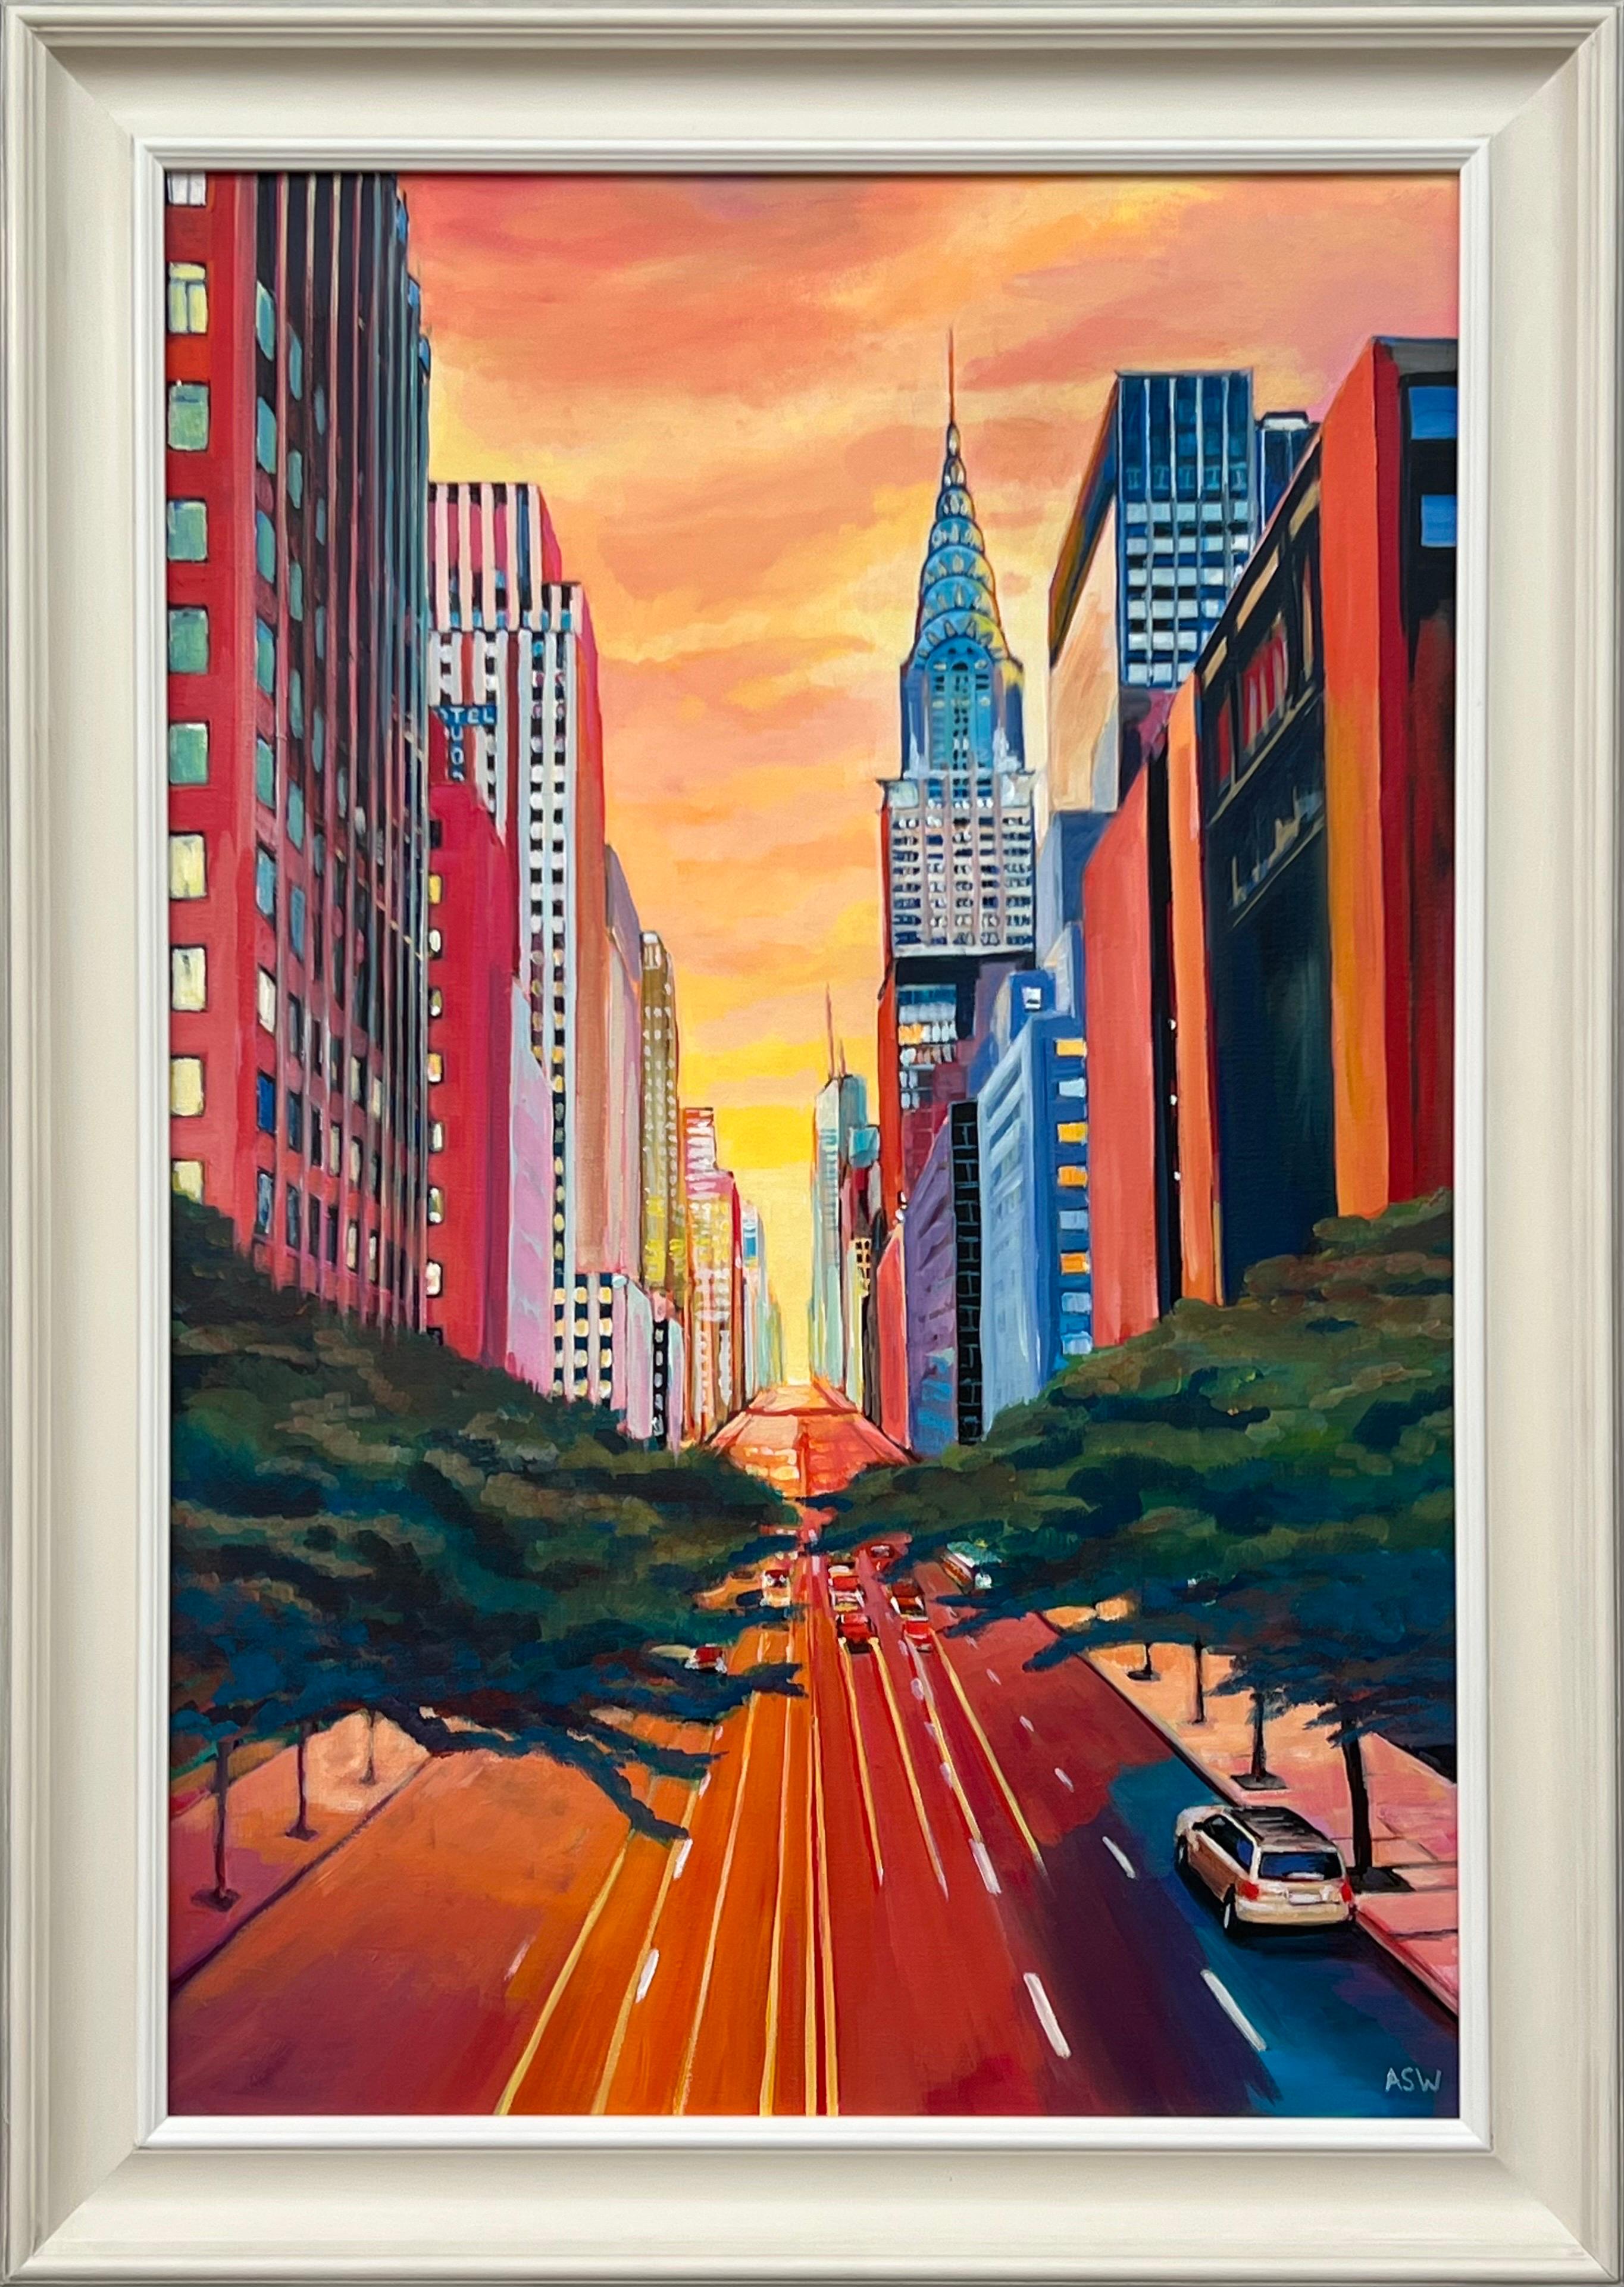 Figurative Painting Angela Wakefield - Peinture du Chrysler Building, 42nd Street, New York, par un artiste britannique